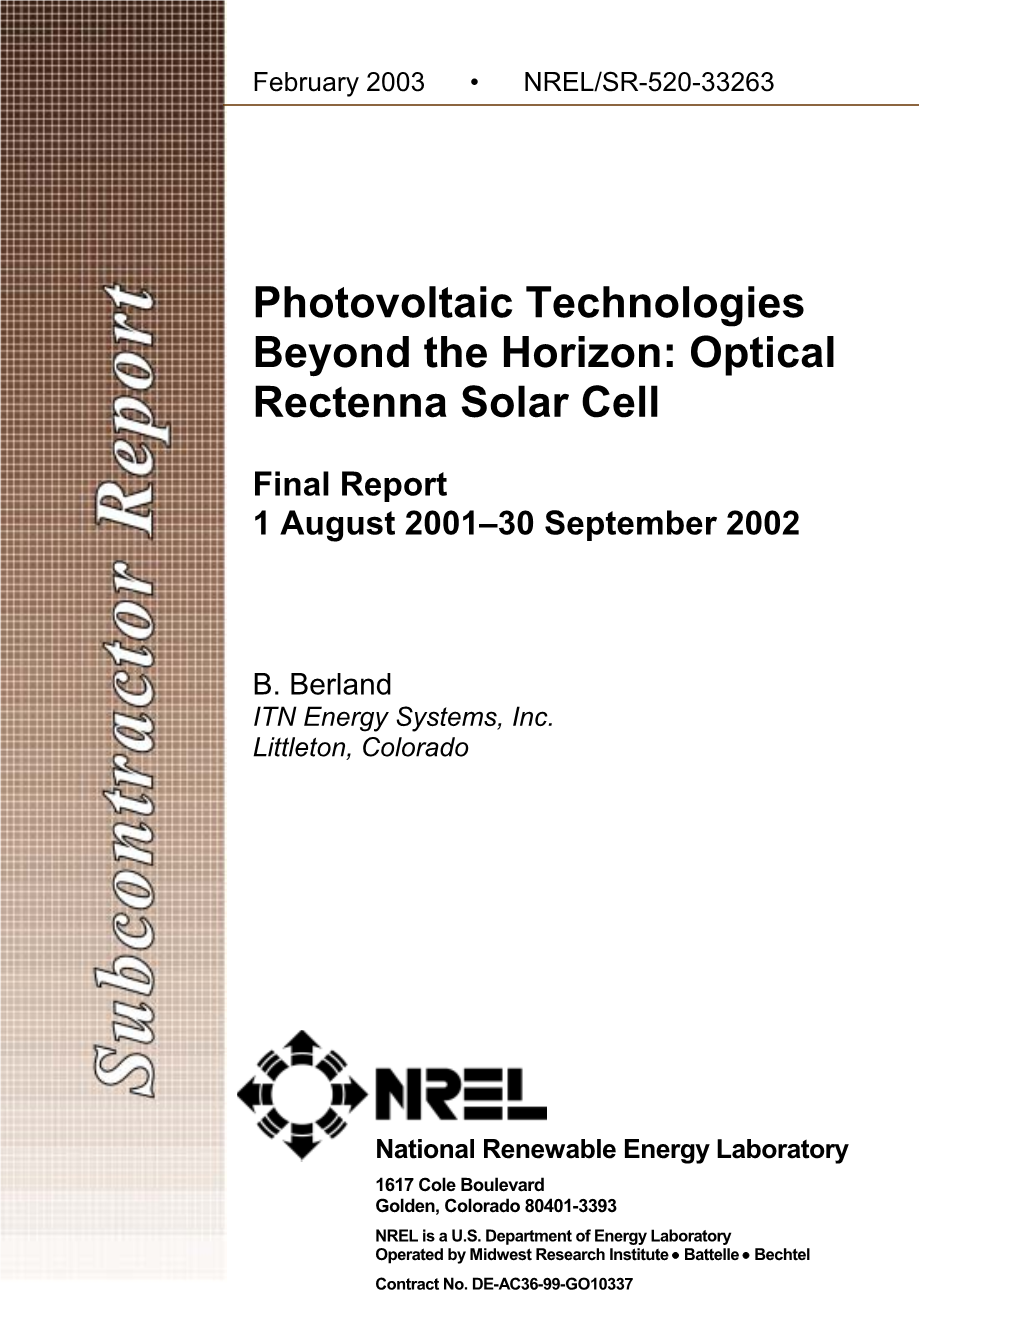 Photovoltaic Technologies Beyond the Horizon: Optical Rectenna Solar Cell